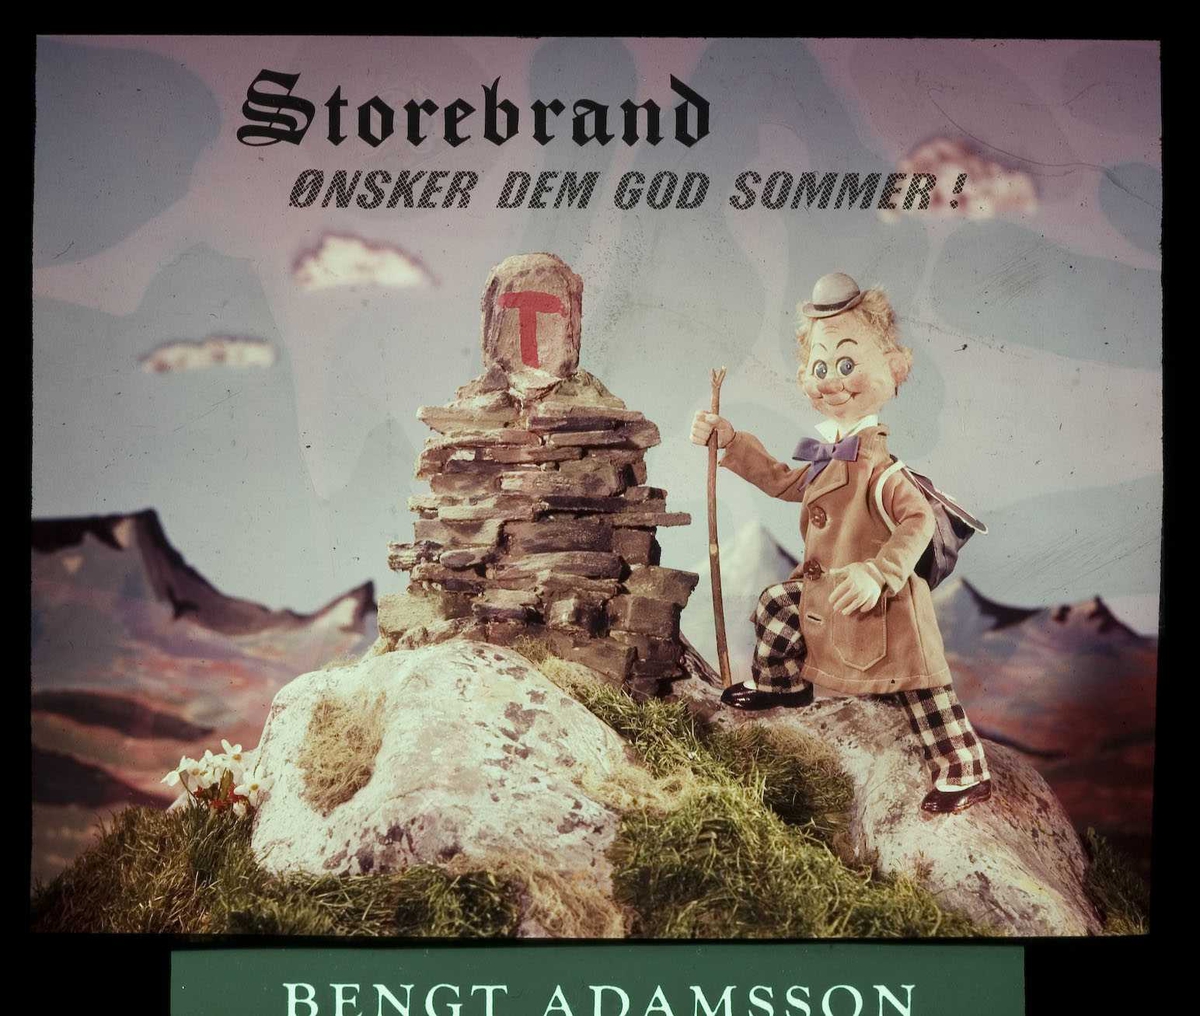 Kinoreklame fra Ski for Storebrand forsikring. Storebrand ønsker Dem god sommer! Agent Bengt Adamsson